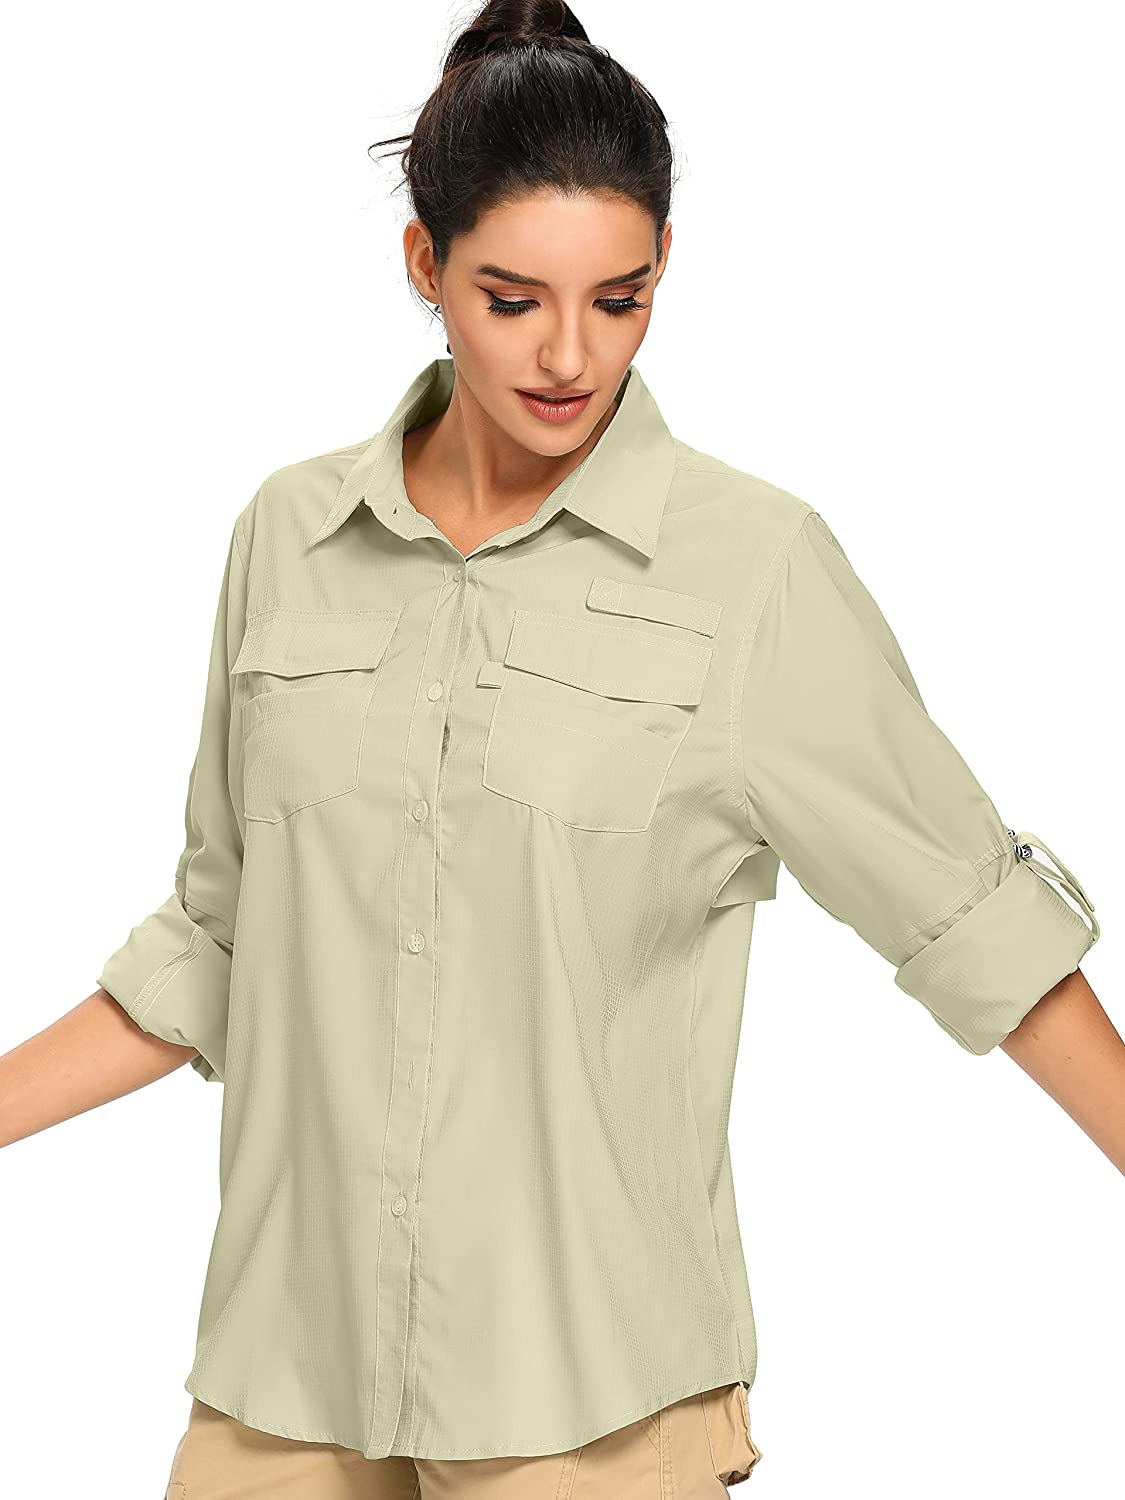 Women's UPF 50+ UV Sun Protection Shirt, Long Sleeve Fishing Hiking Shirt,  Quick